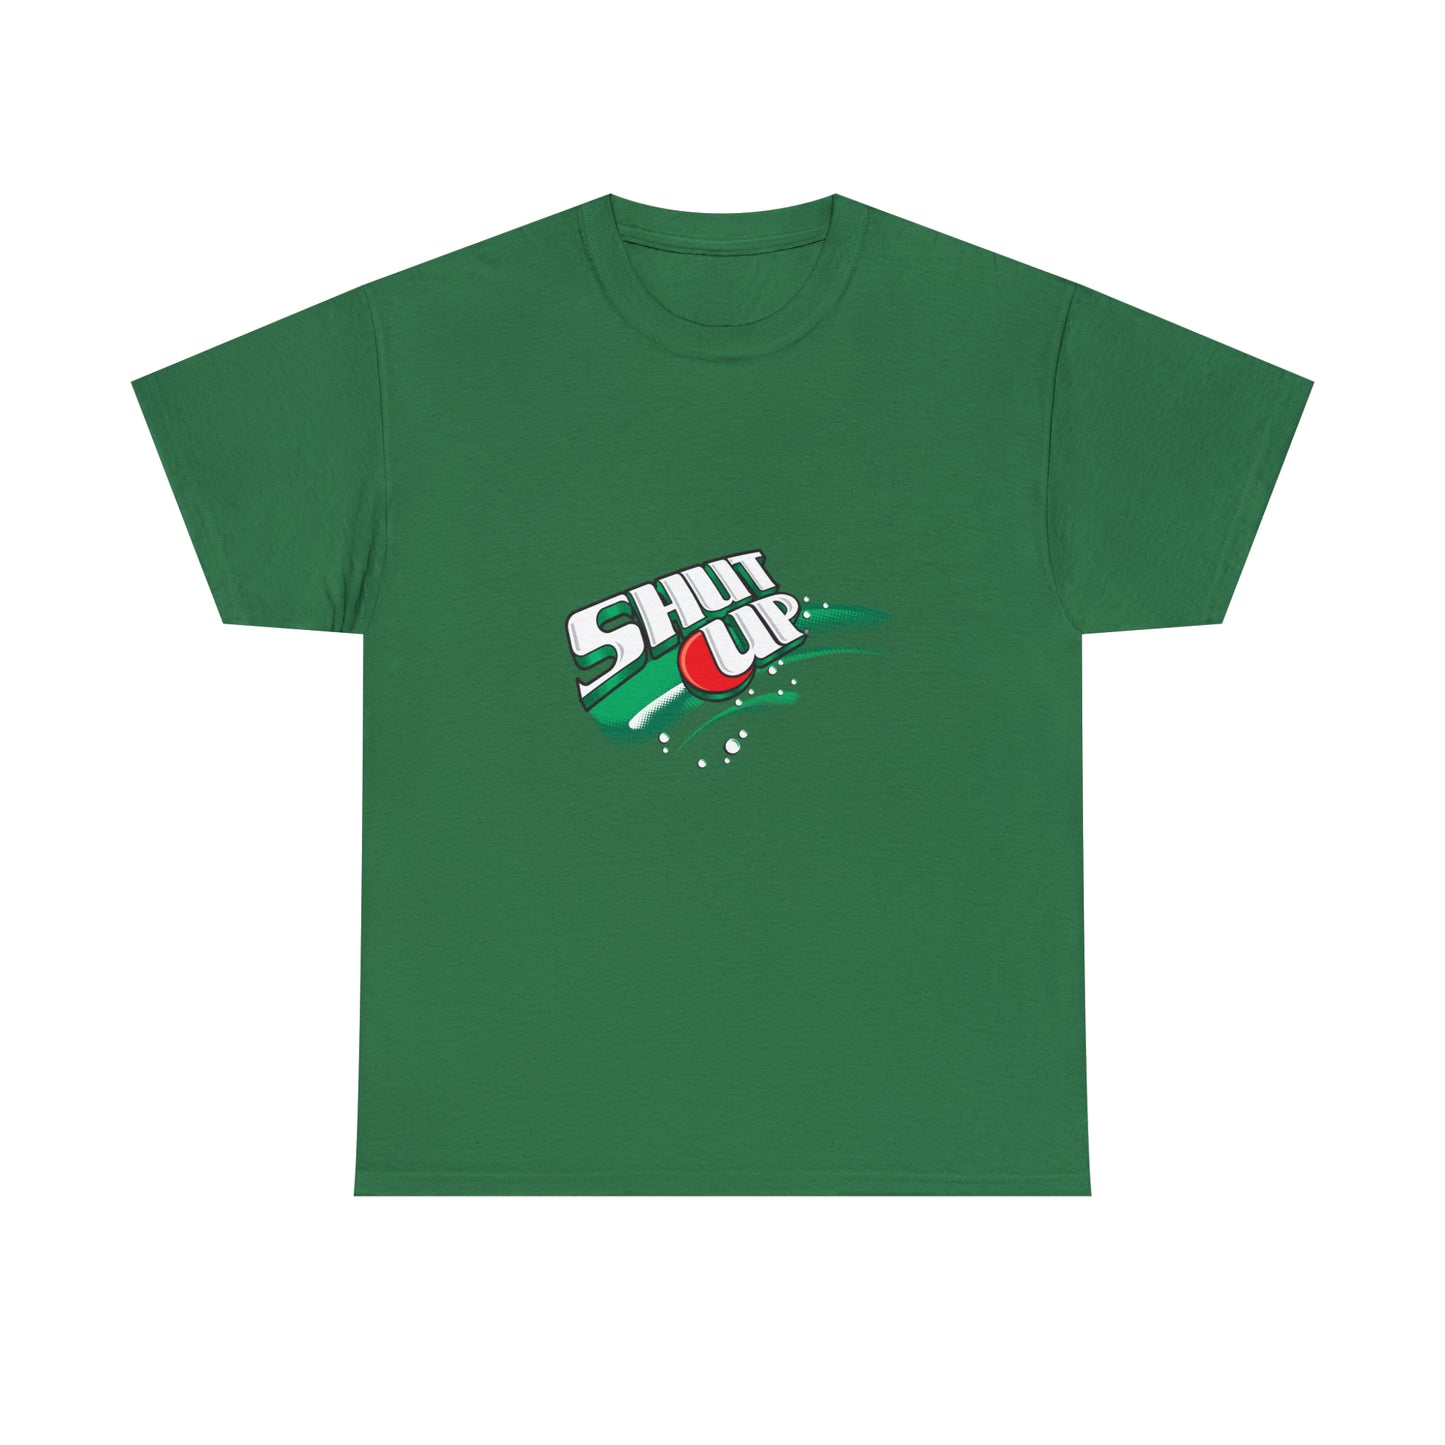 Custom Parody T-shirt, Shut-up shirt design